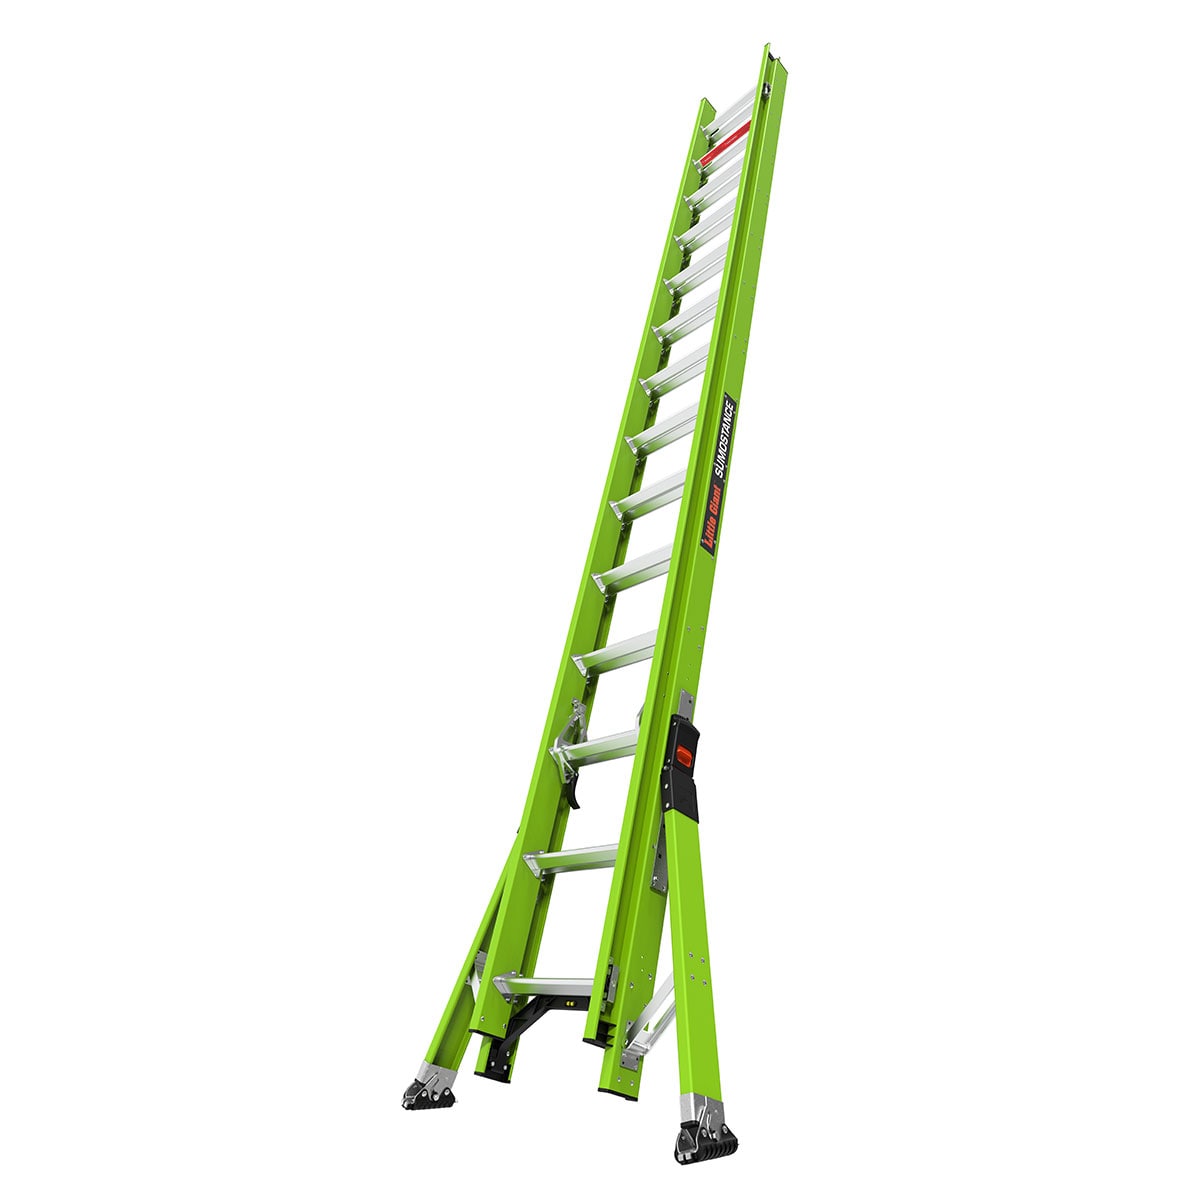 Little Giant Ladders Sumostance M28 28-ft Fiberglass Type 1a- 300 